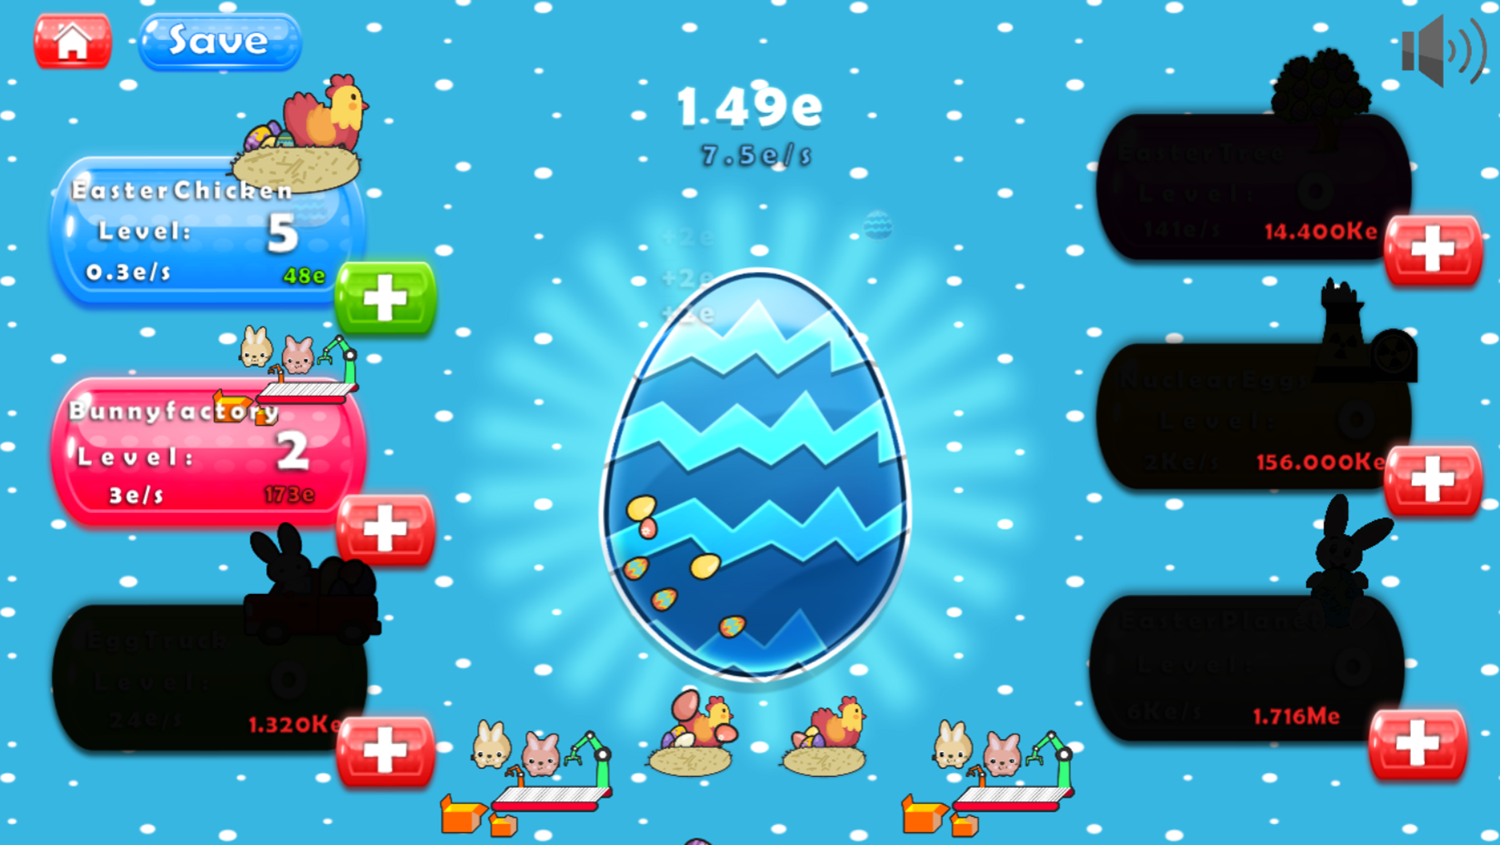 Easter Clicker Game Bunny Factory Unlocked Screenshot.